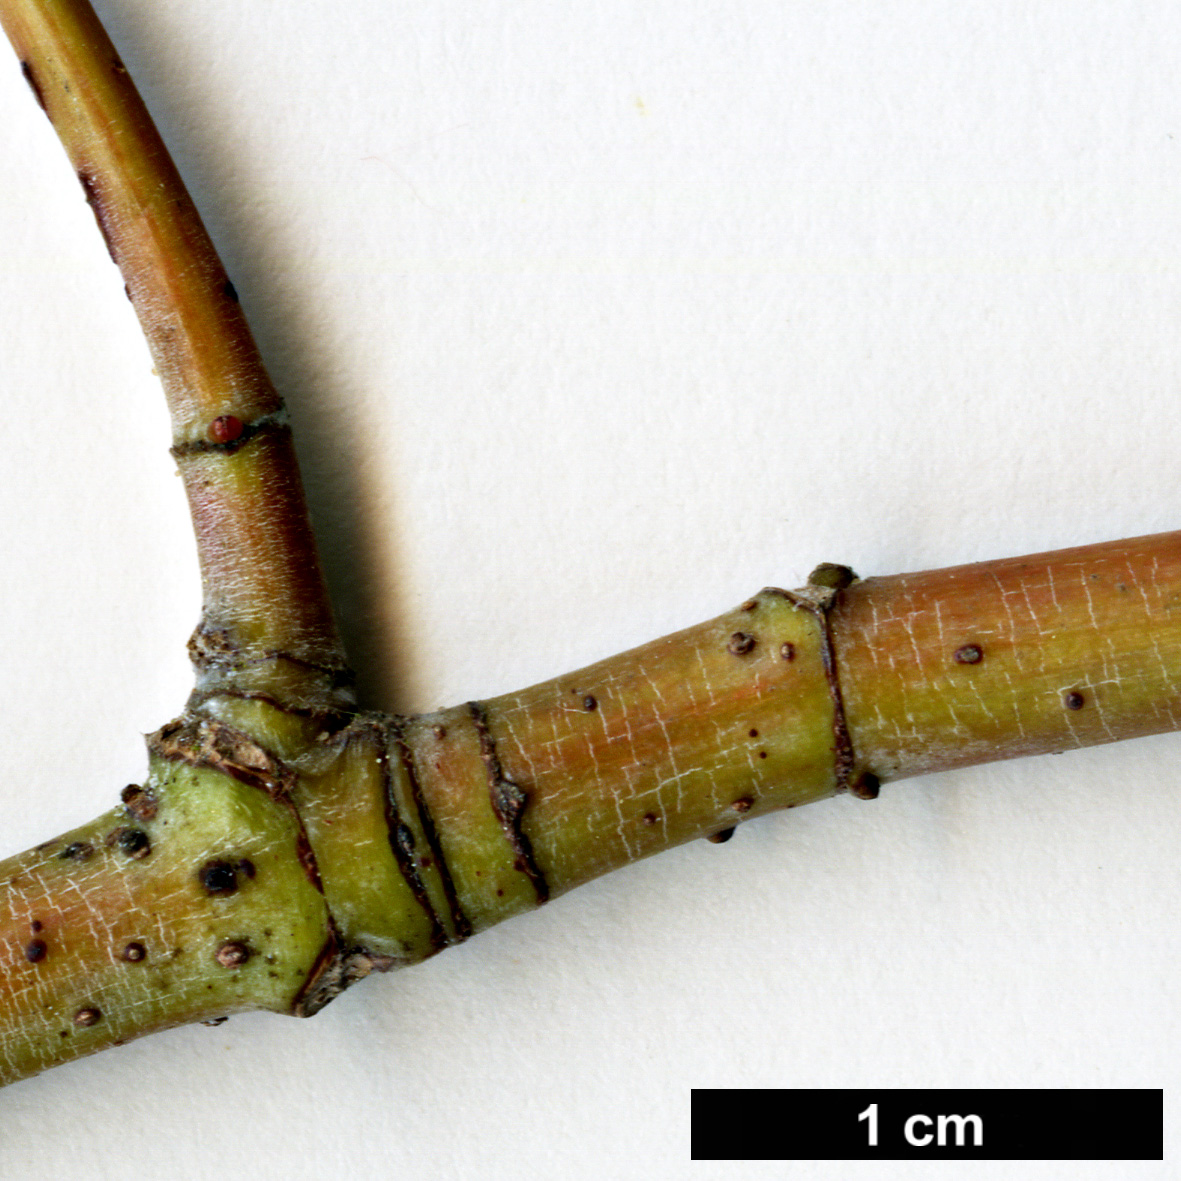 High resolution image: Family: Sapindaceae - Genus: Acer - Taxon: pinnatinervium